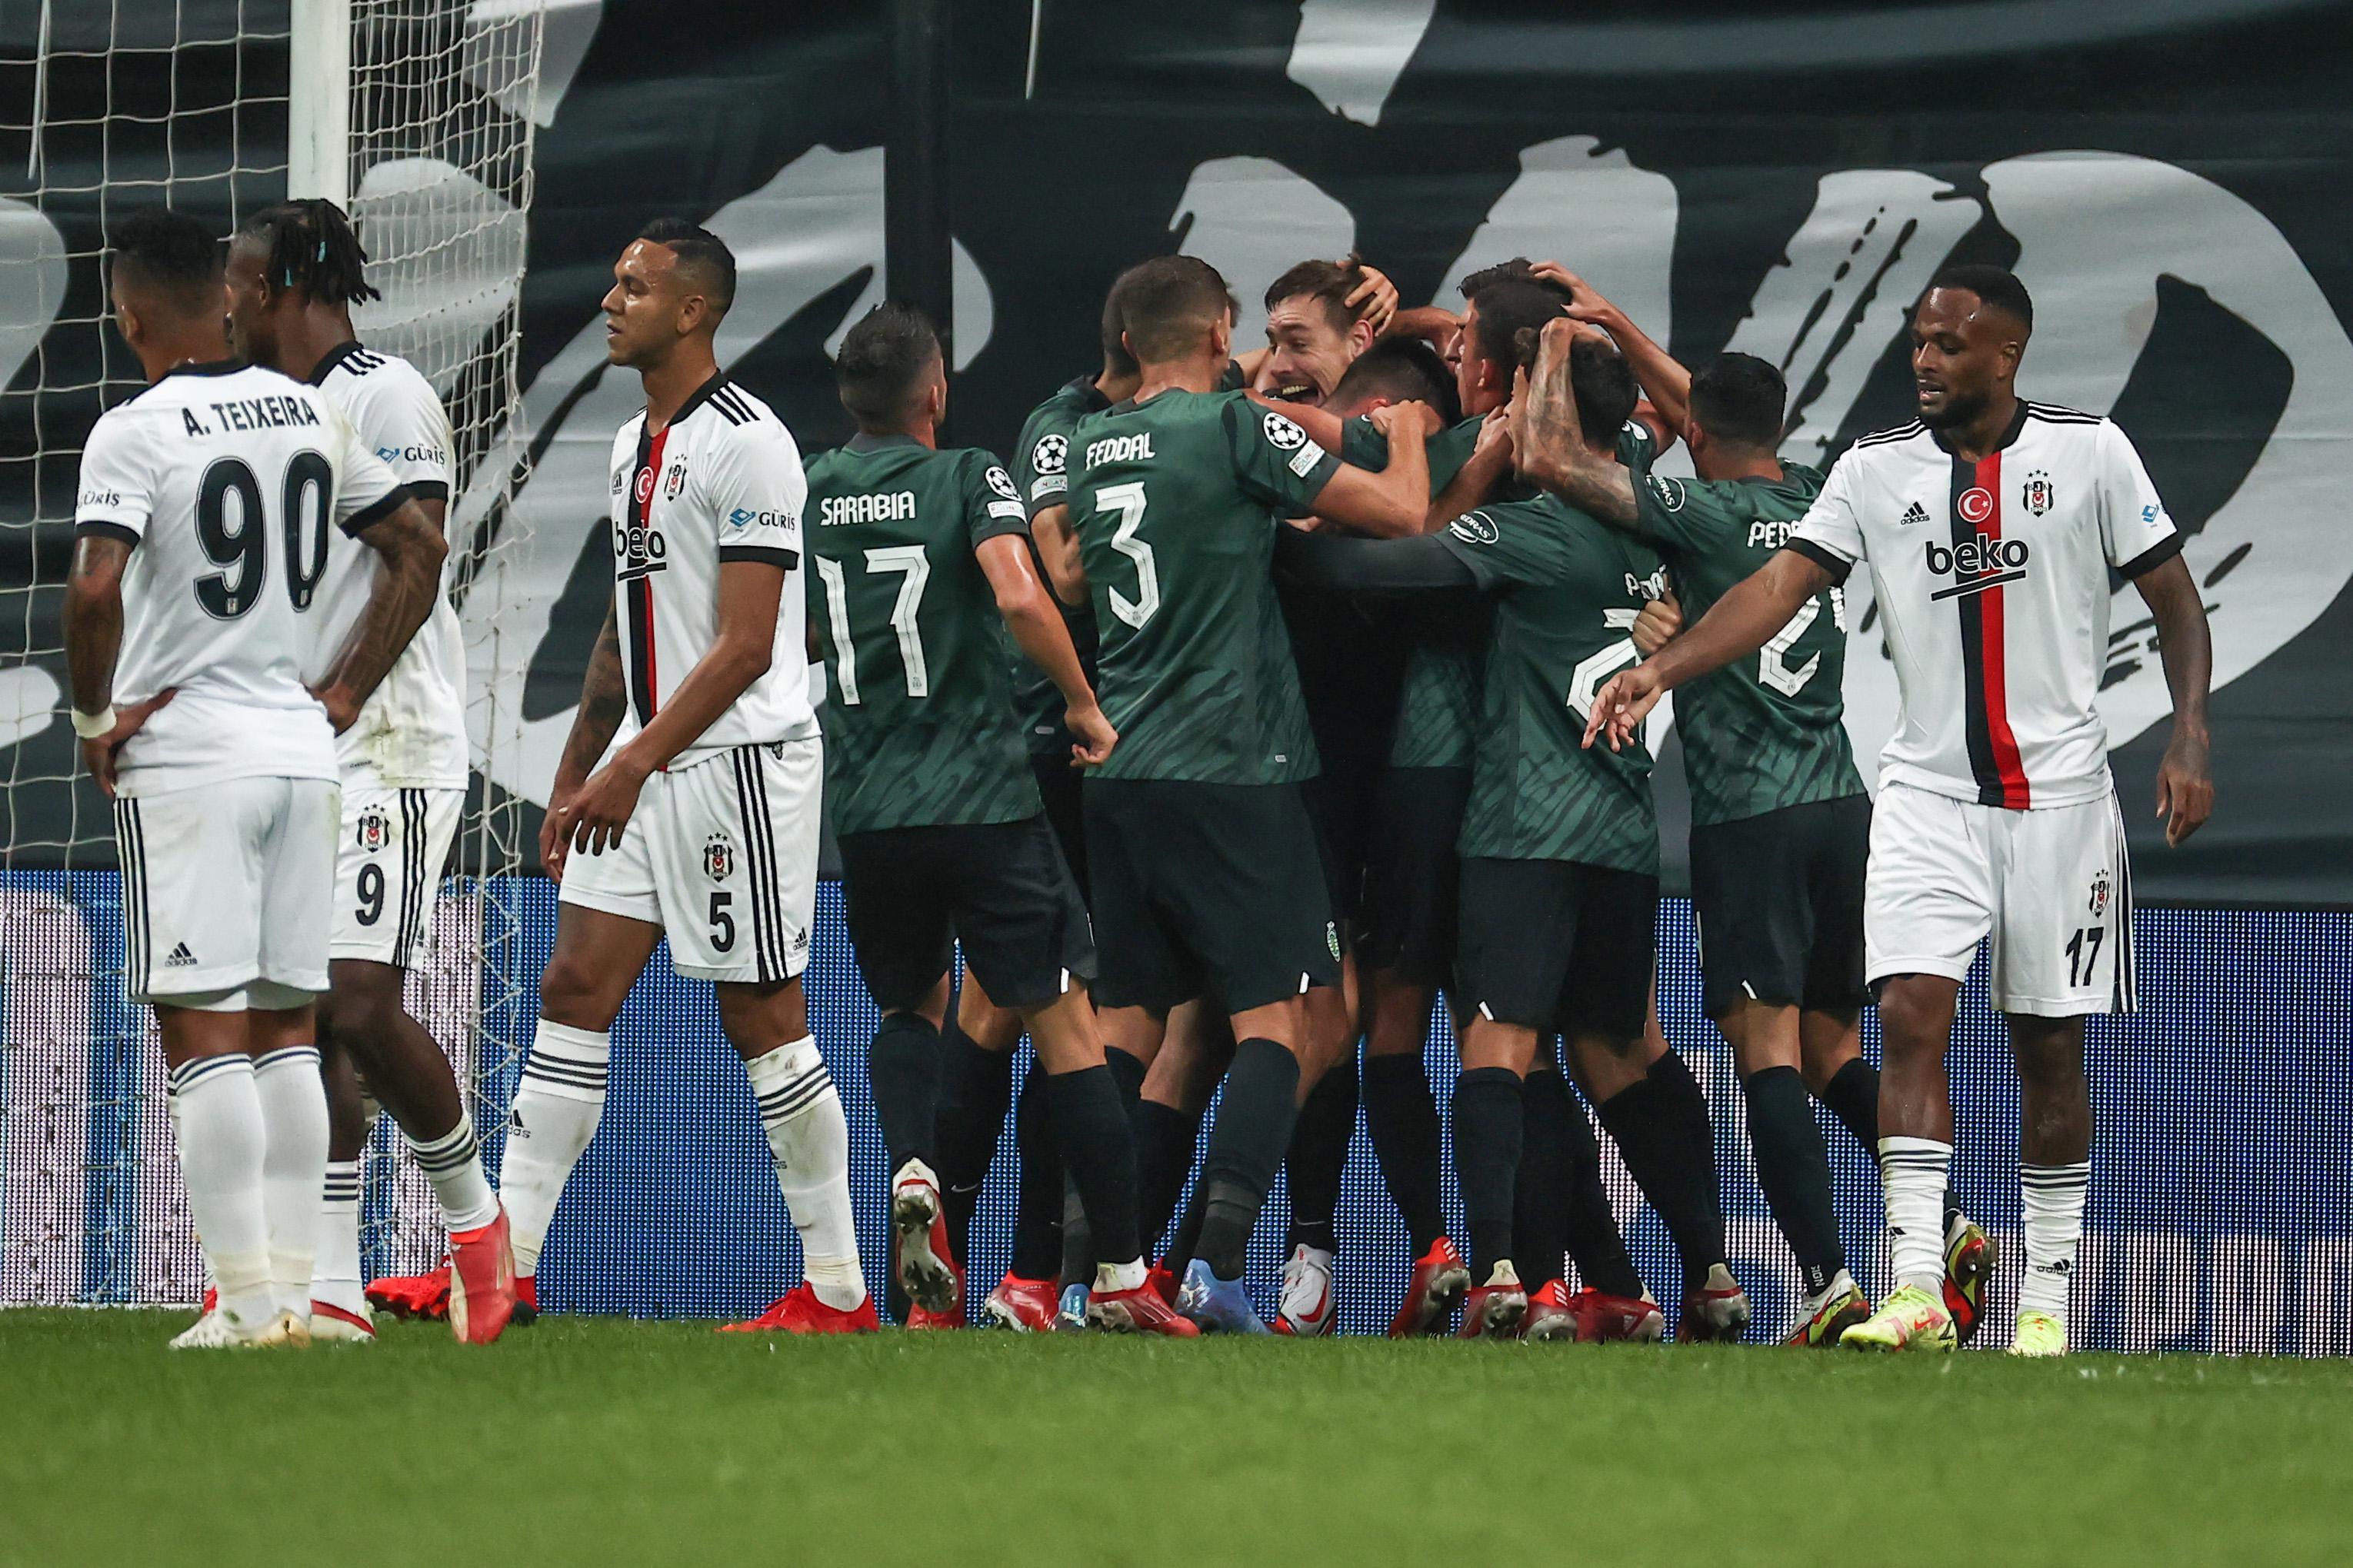 (ÖZET) Beşiktaş-Sporting Lizbon maç sonucu: 1-4